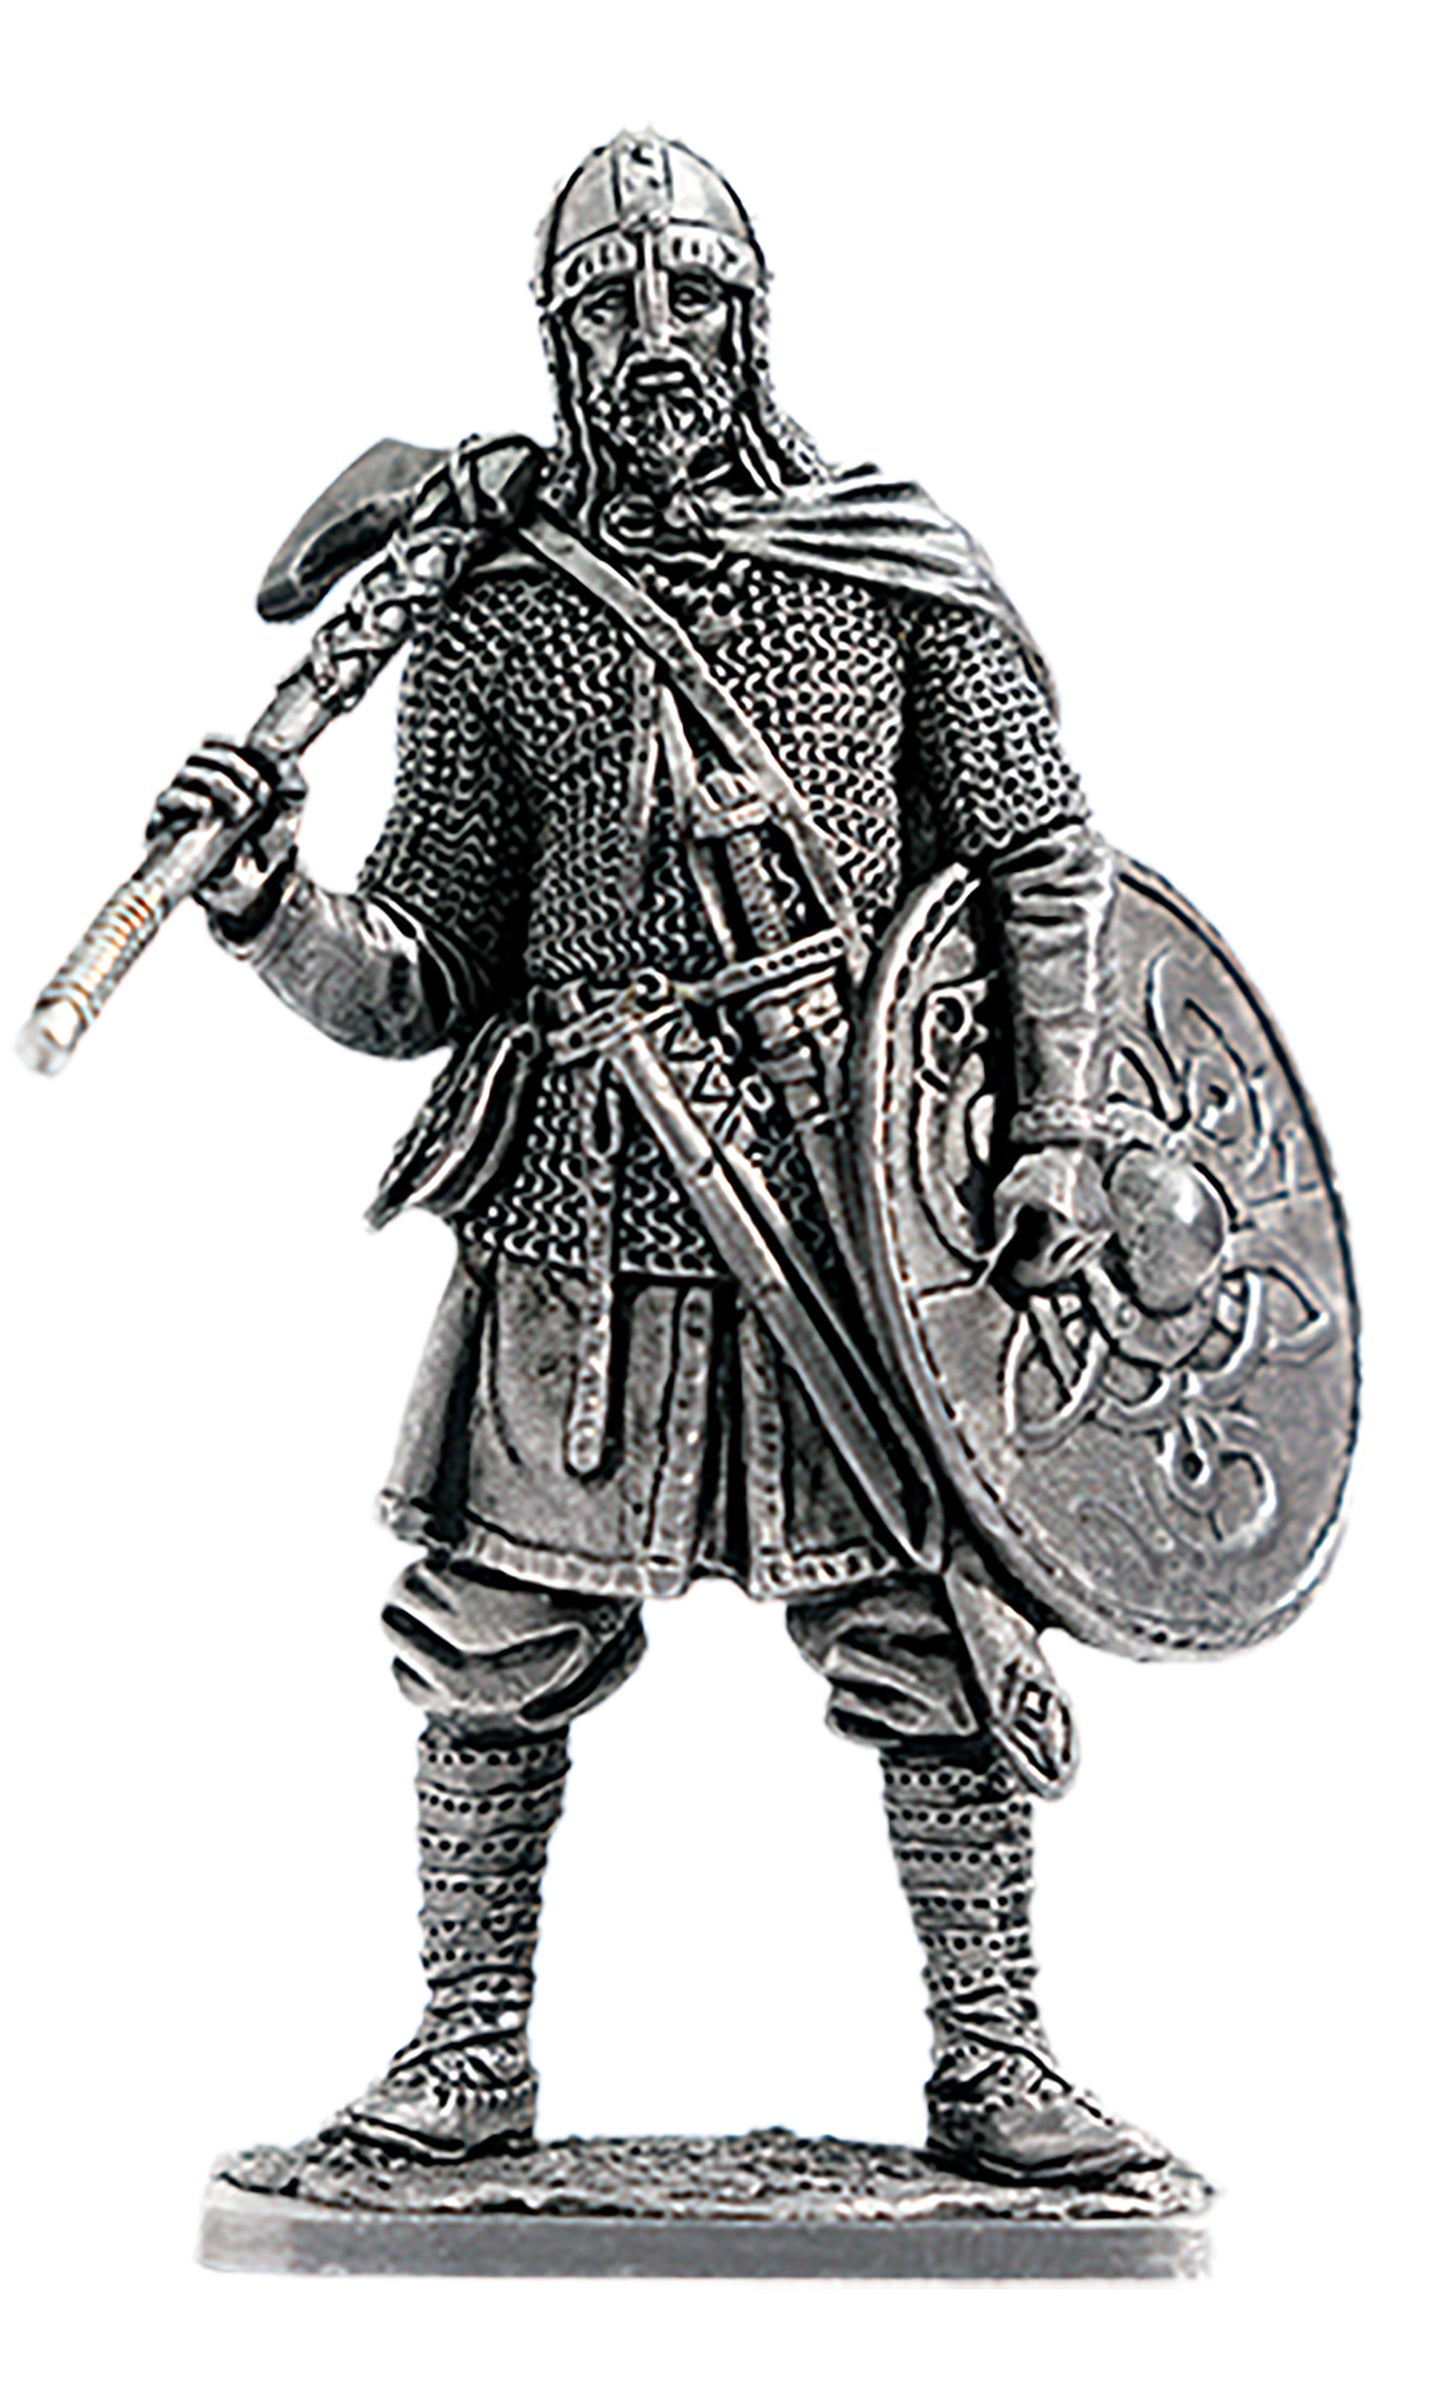 EK-M297 - Трувор - брат Рюрика, правитель в Изборске (862 г.)